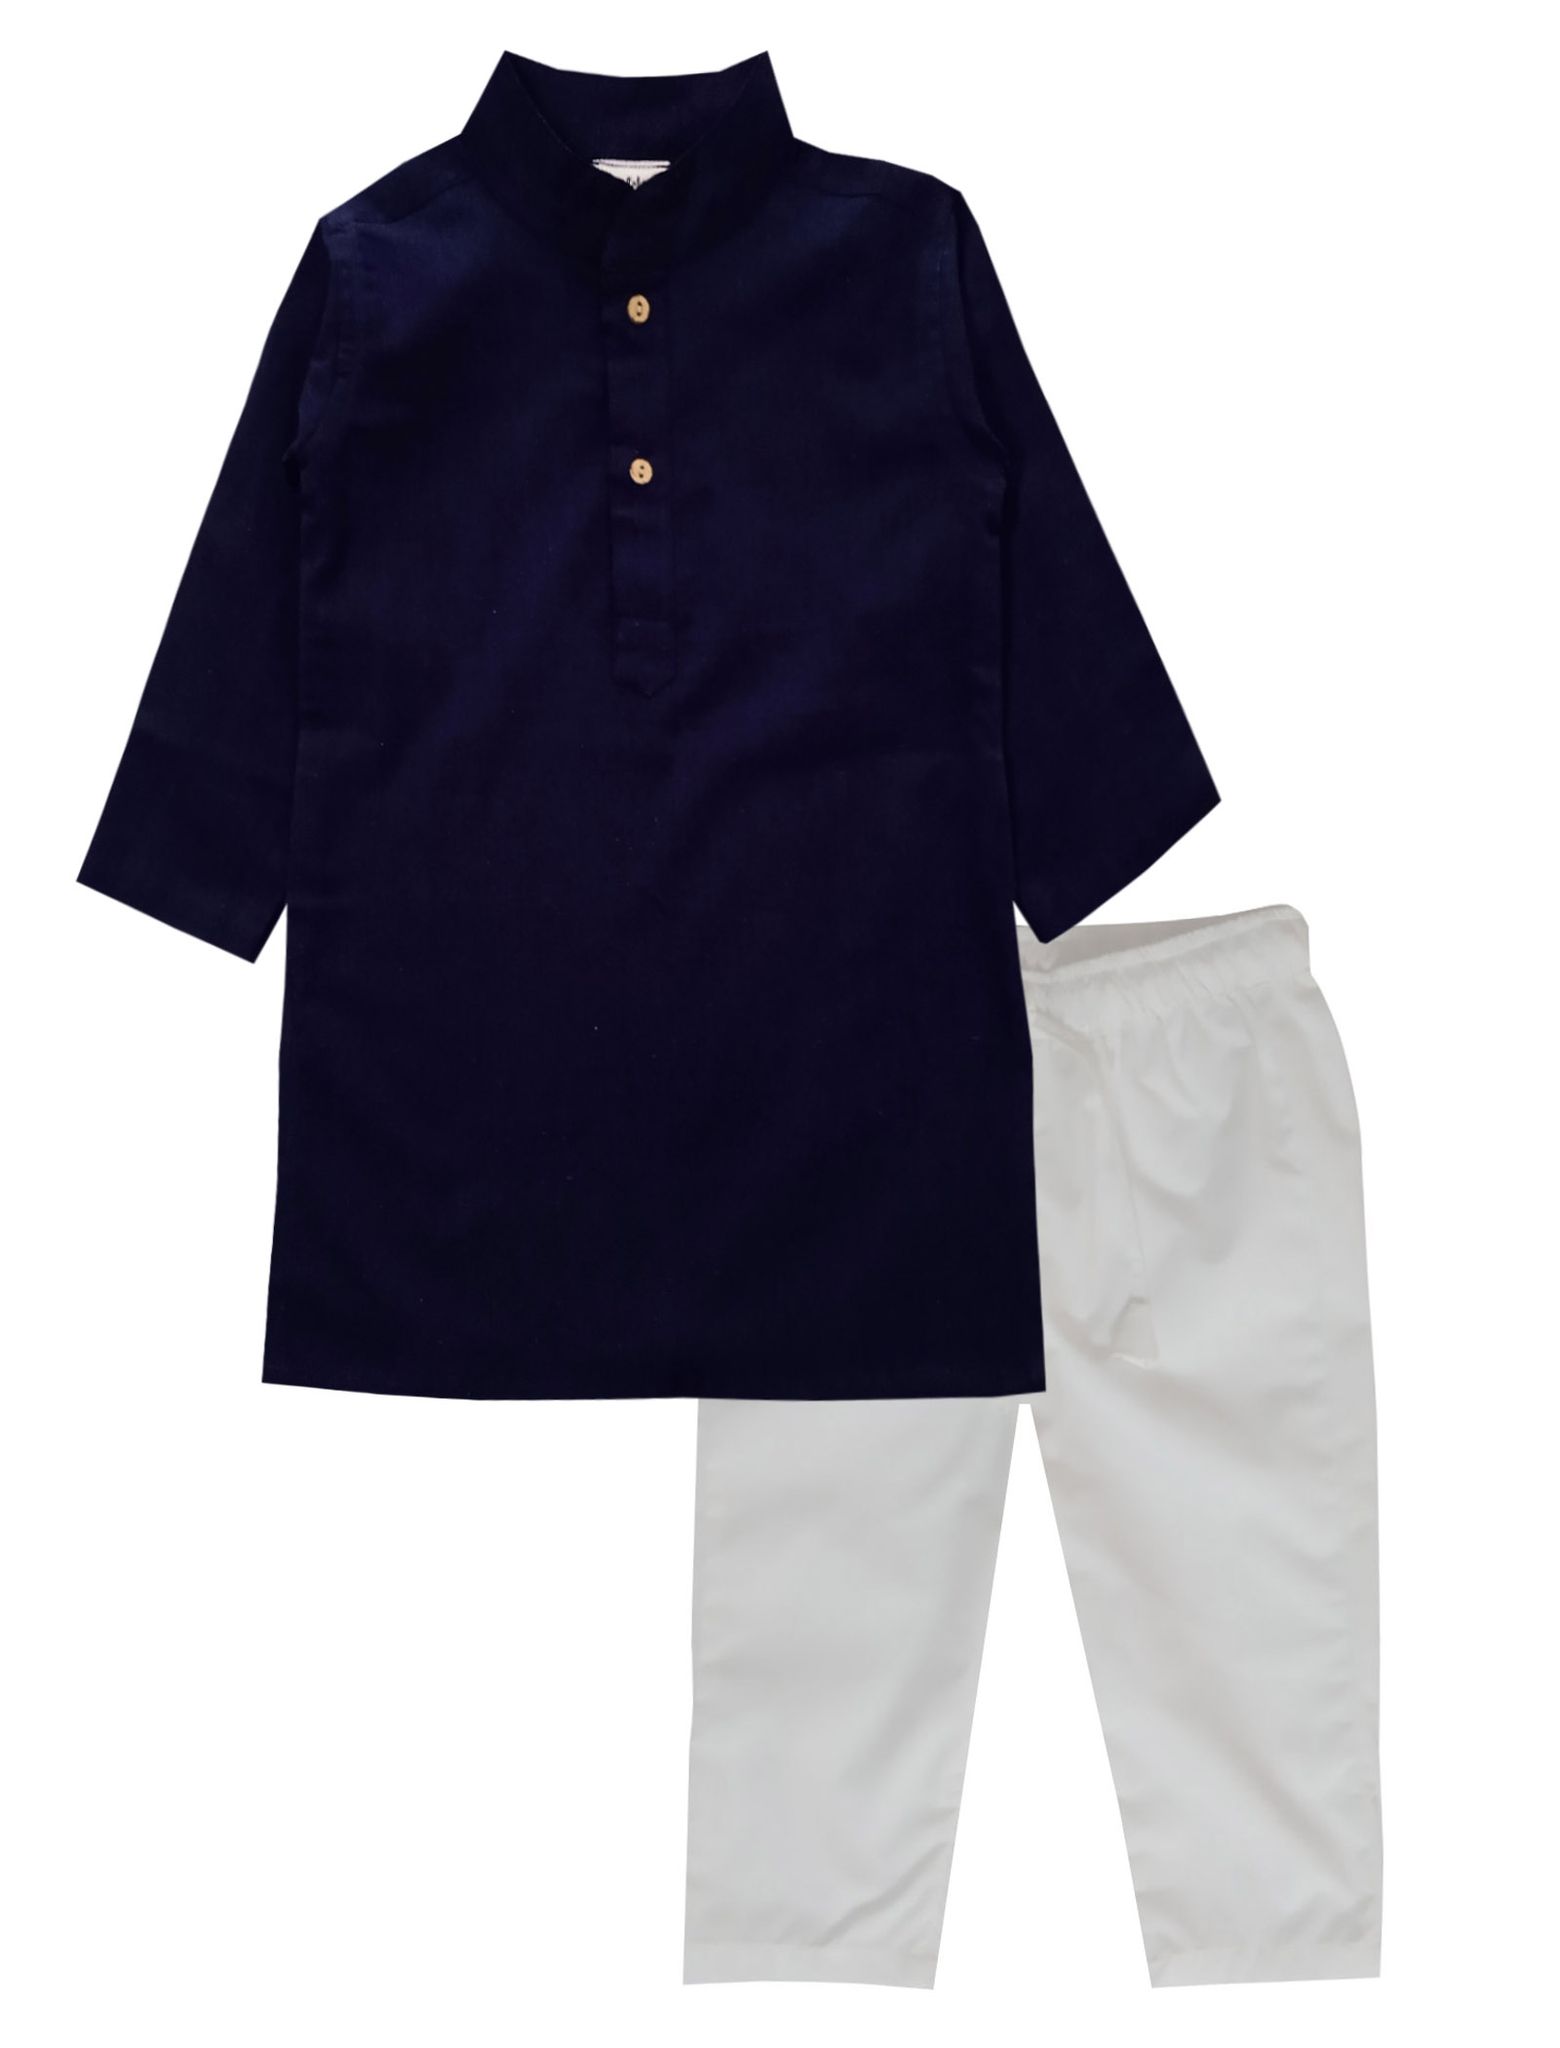 Snowflakes Boys Solid kurta And Pyjama Set- Navy Blue & White